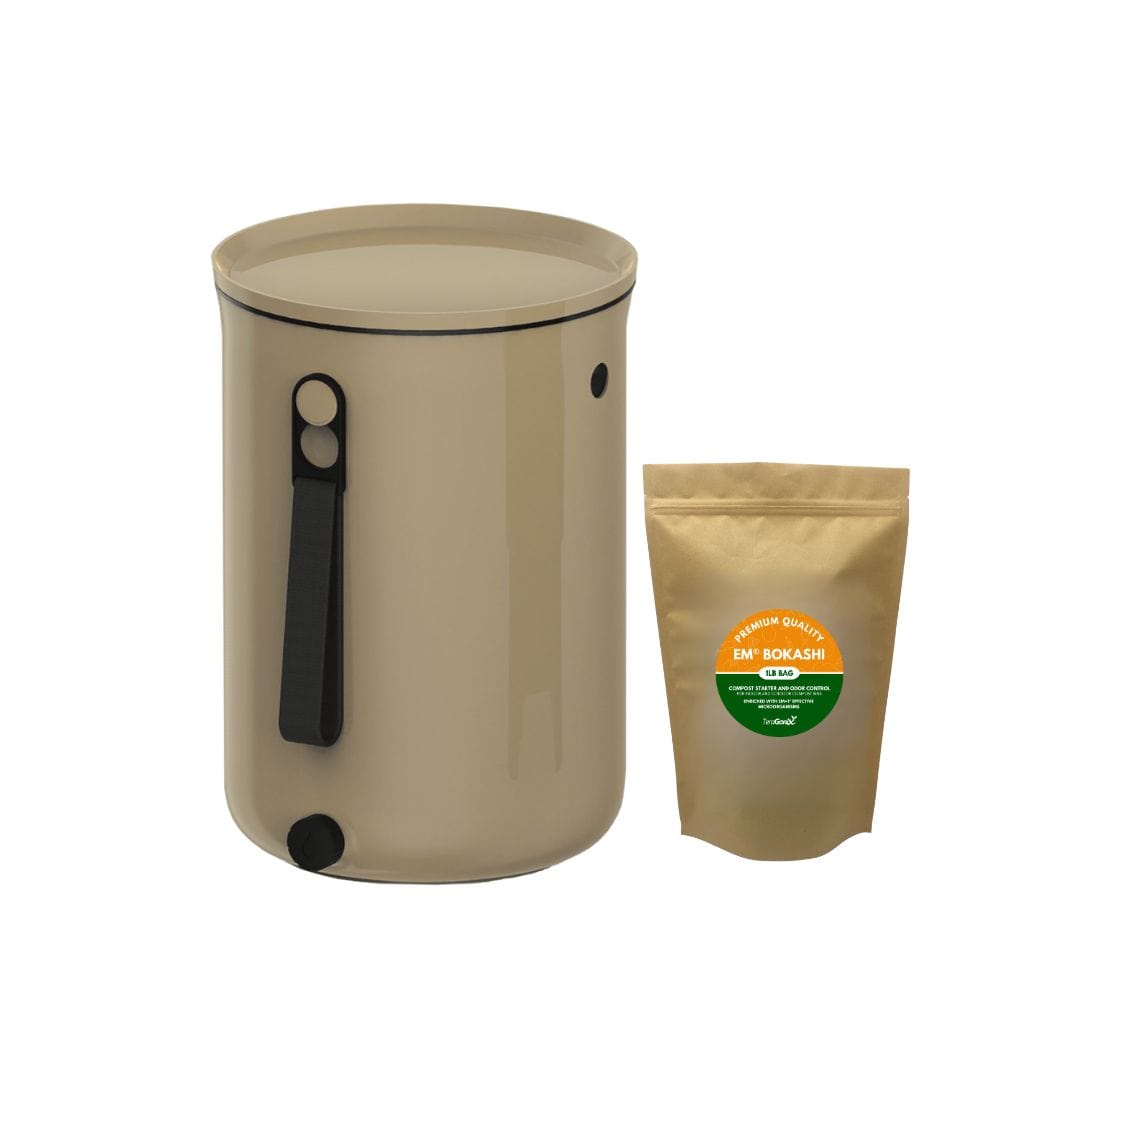 TeraGanix Bokashi Compost Bin Single Bucket + 1 lb bag of EM Bokashi / Cappuccino Bokashi Kitchen Compost Bin, 2.5 gal